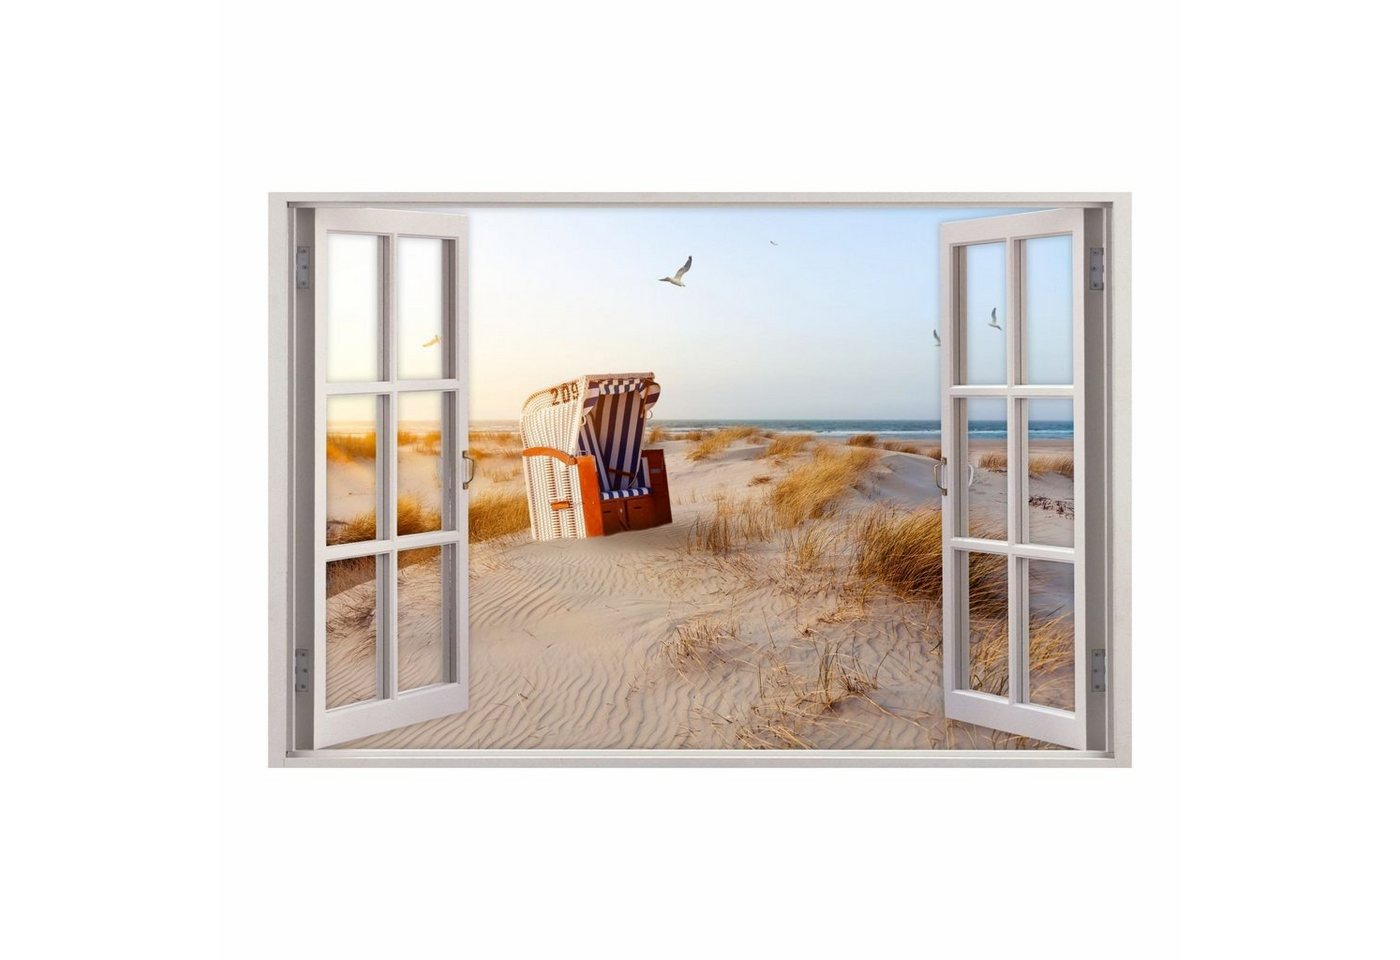 nikima Wandtattoo 152 Fenster - Ostsee Strandkorb Maritim (PVC-Folie), in 5 vers. Größen von nikima